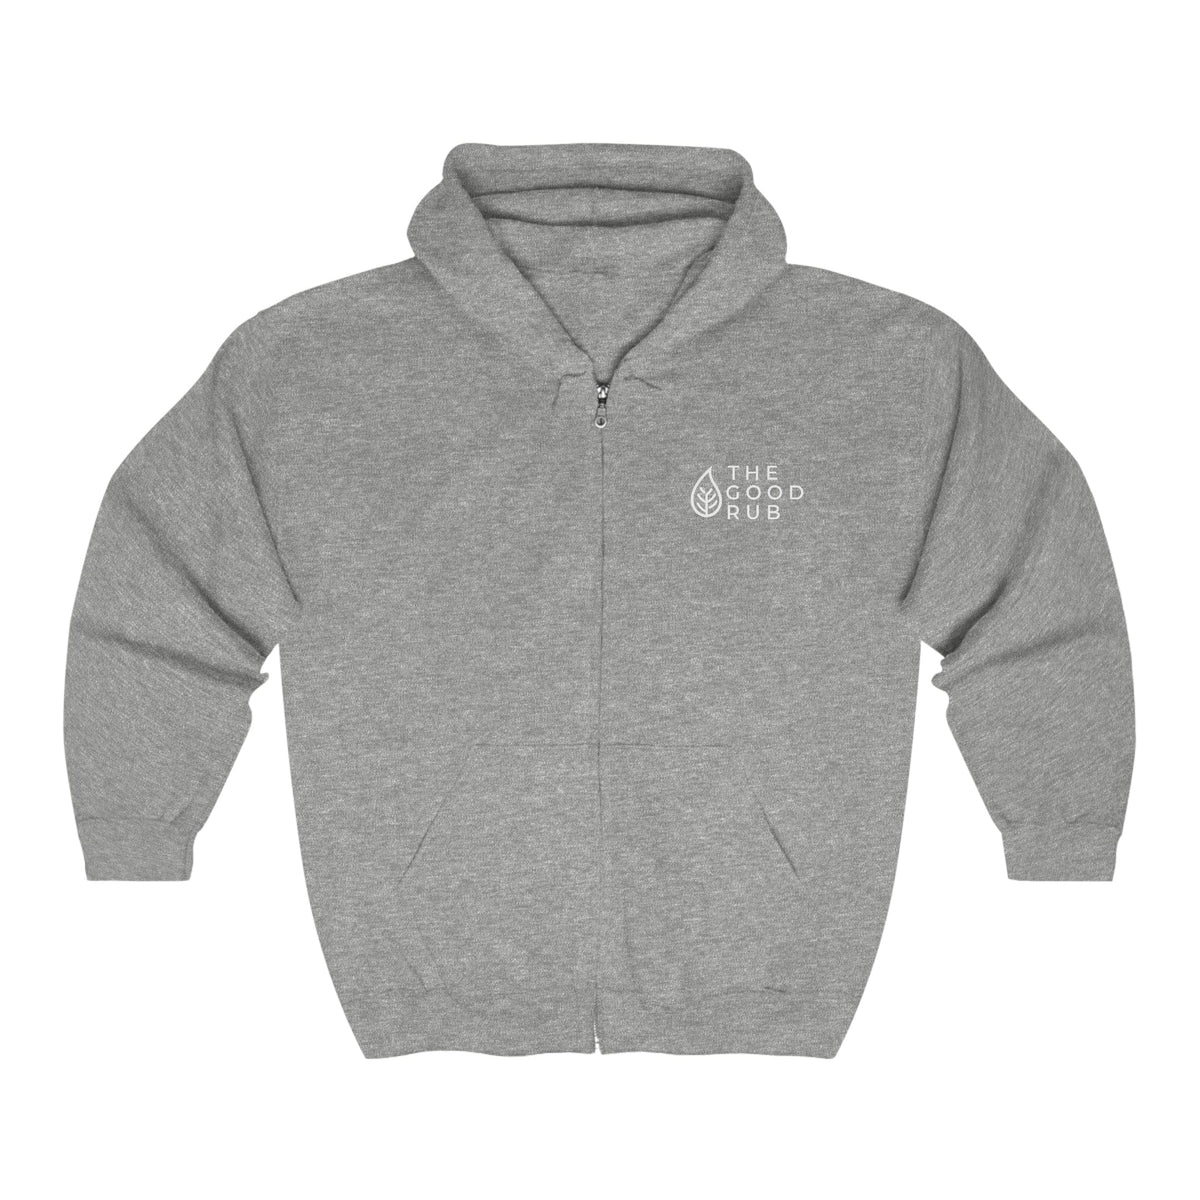 Activate Full Zip Hooded Sweatshirt - The Good Rub